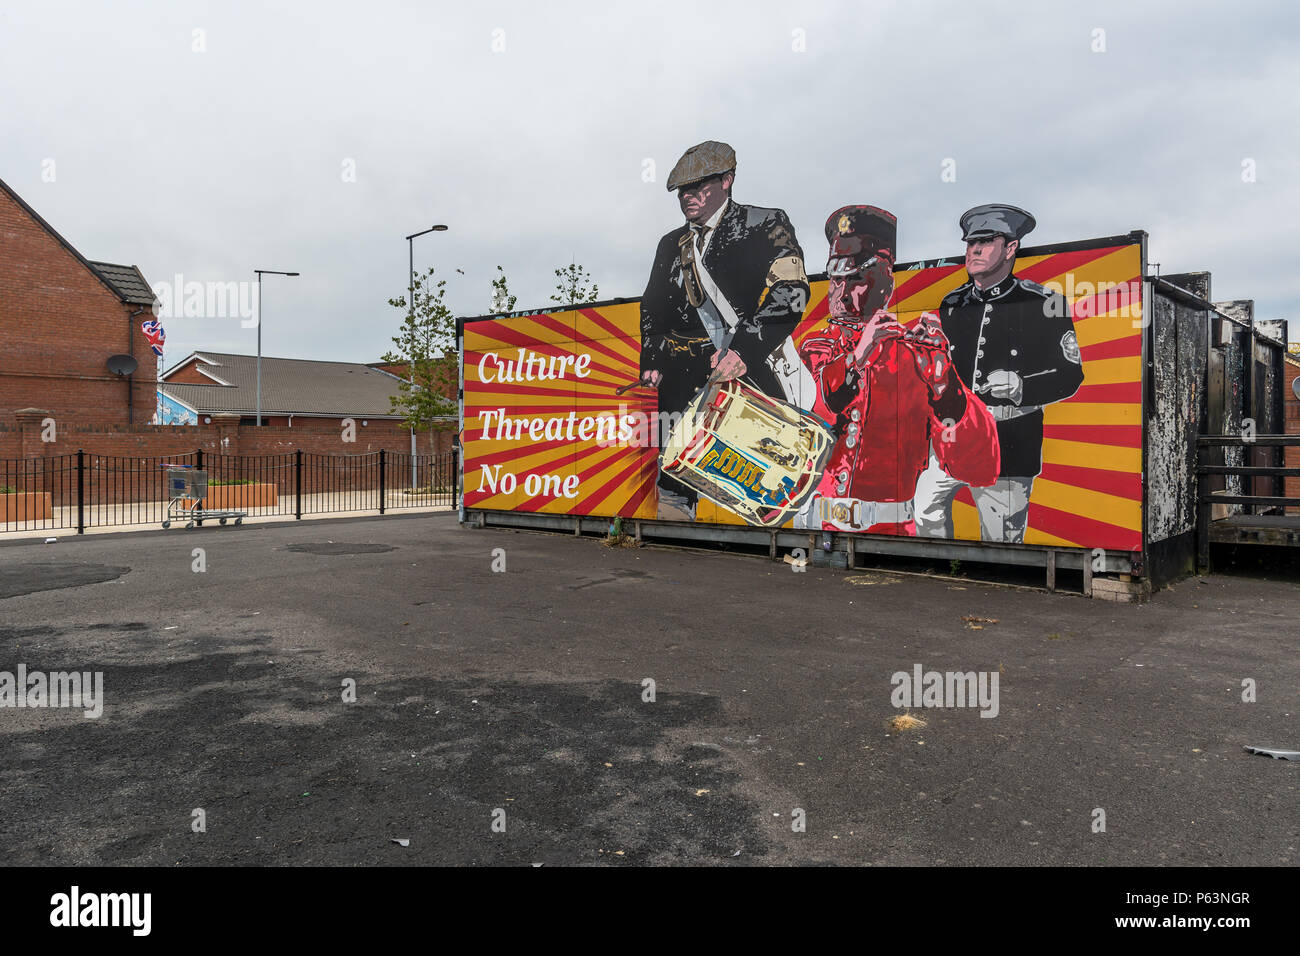 Cultura amenaza a nadie mural en Belfast oriental Foto de stock